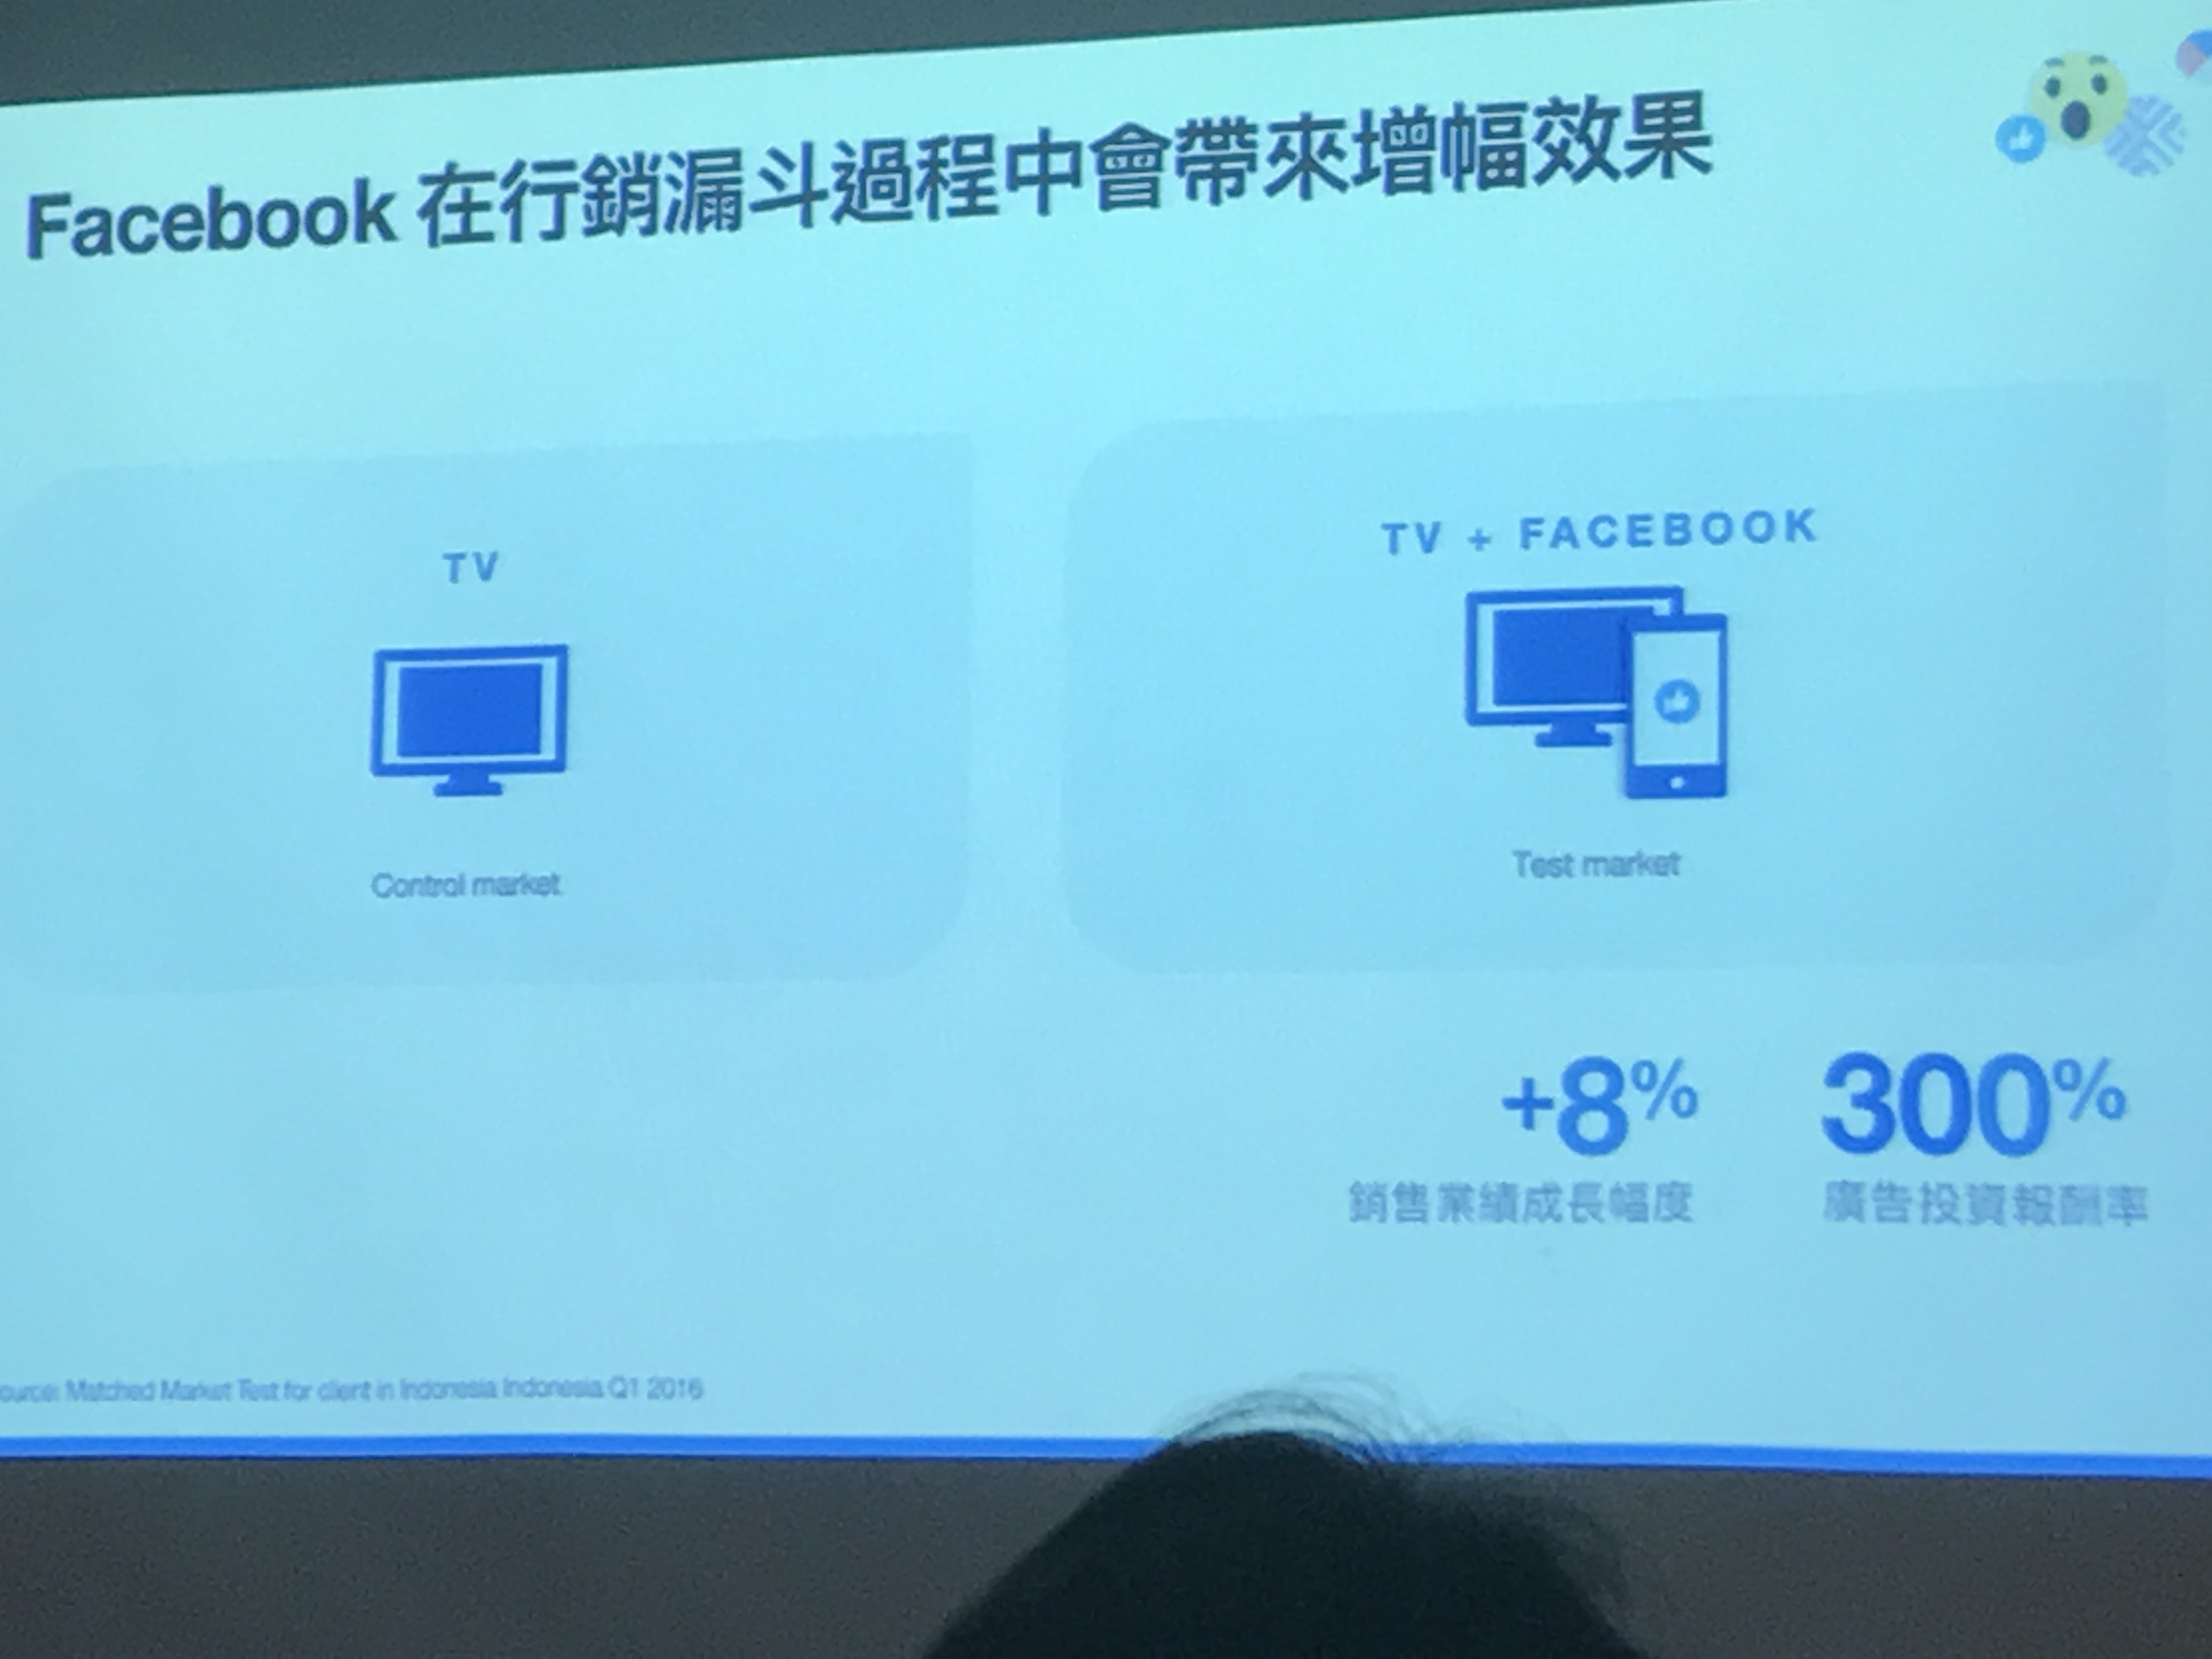 Facebook + TV，３個跨螢策略增加廣告記憶點